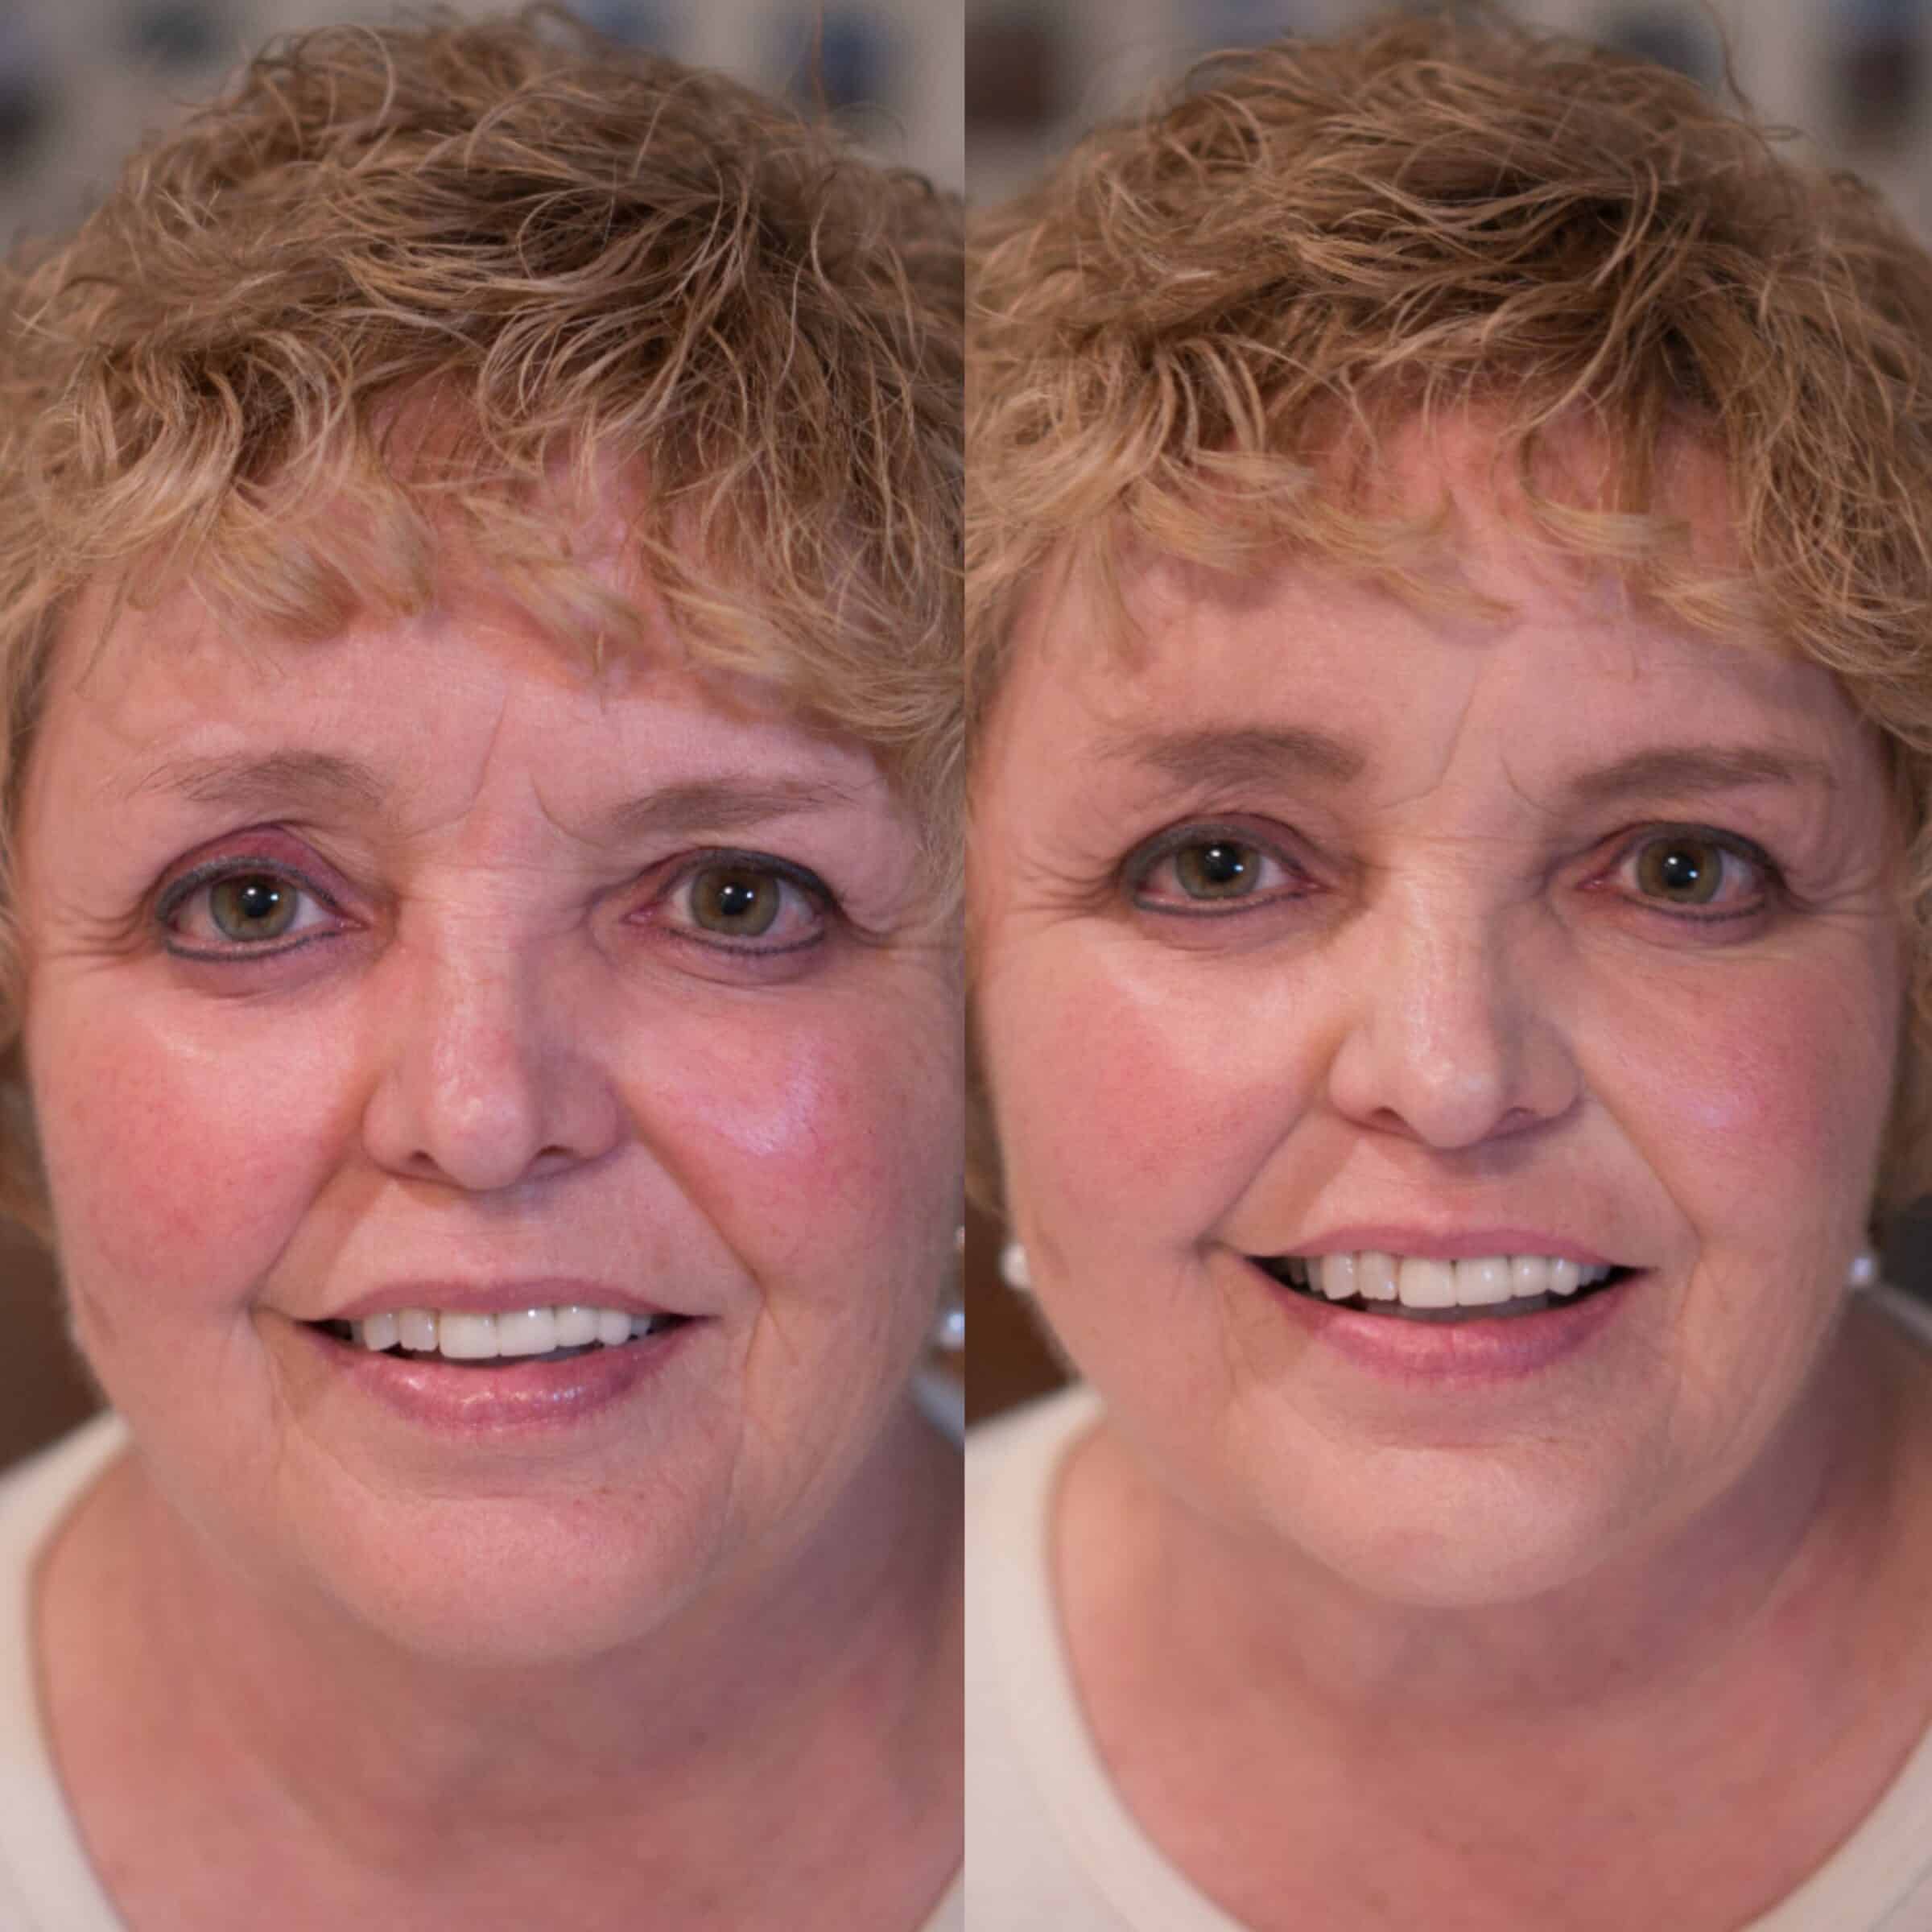 Lovely Before & After using Maskcara Makeup at www.maskcarabeautygirl.com